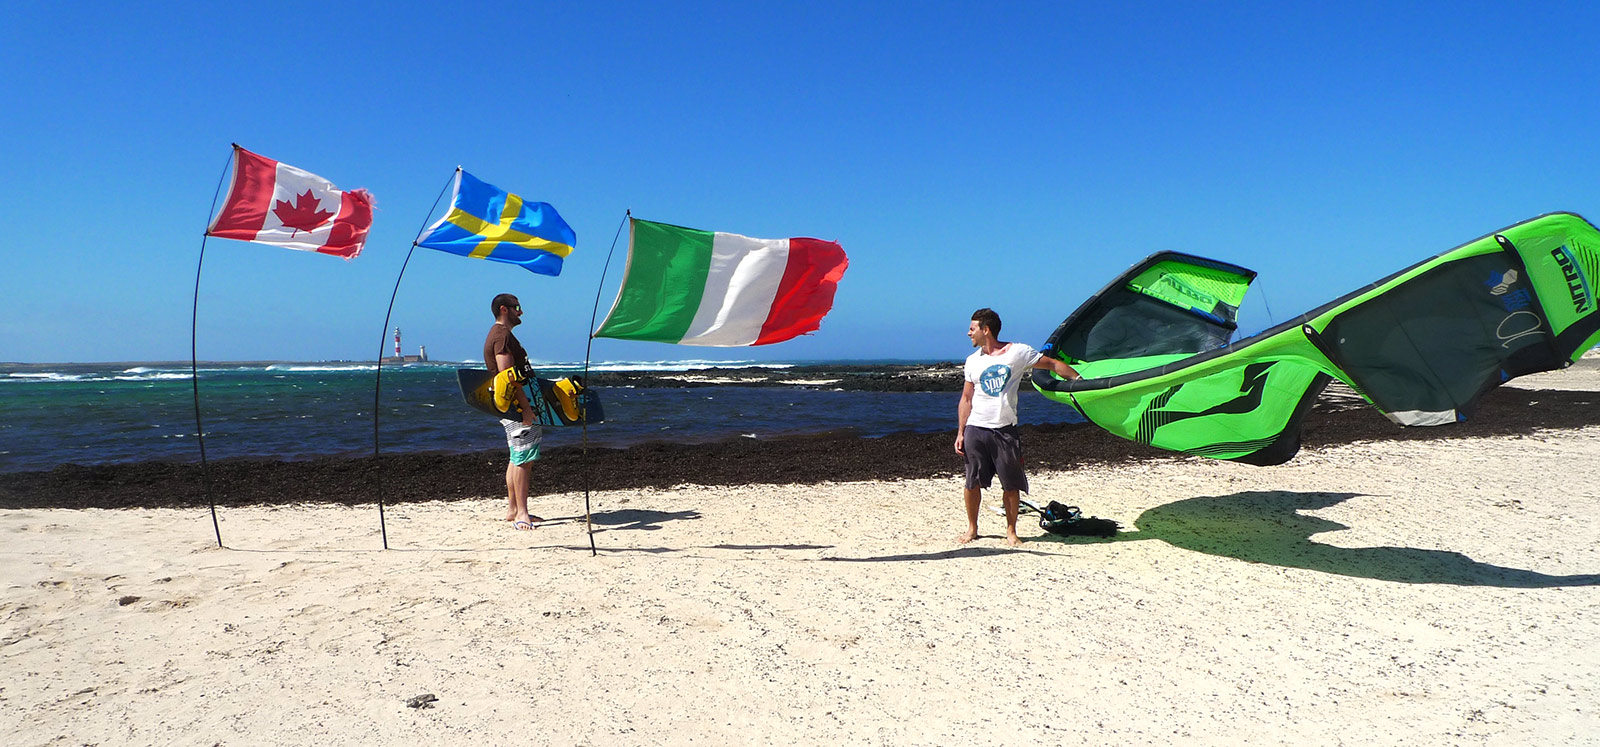 Three flags on the beach of the Boston lagoon